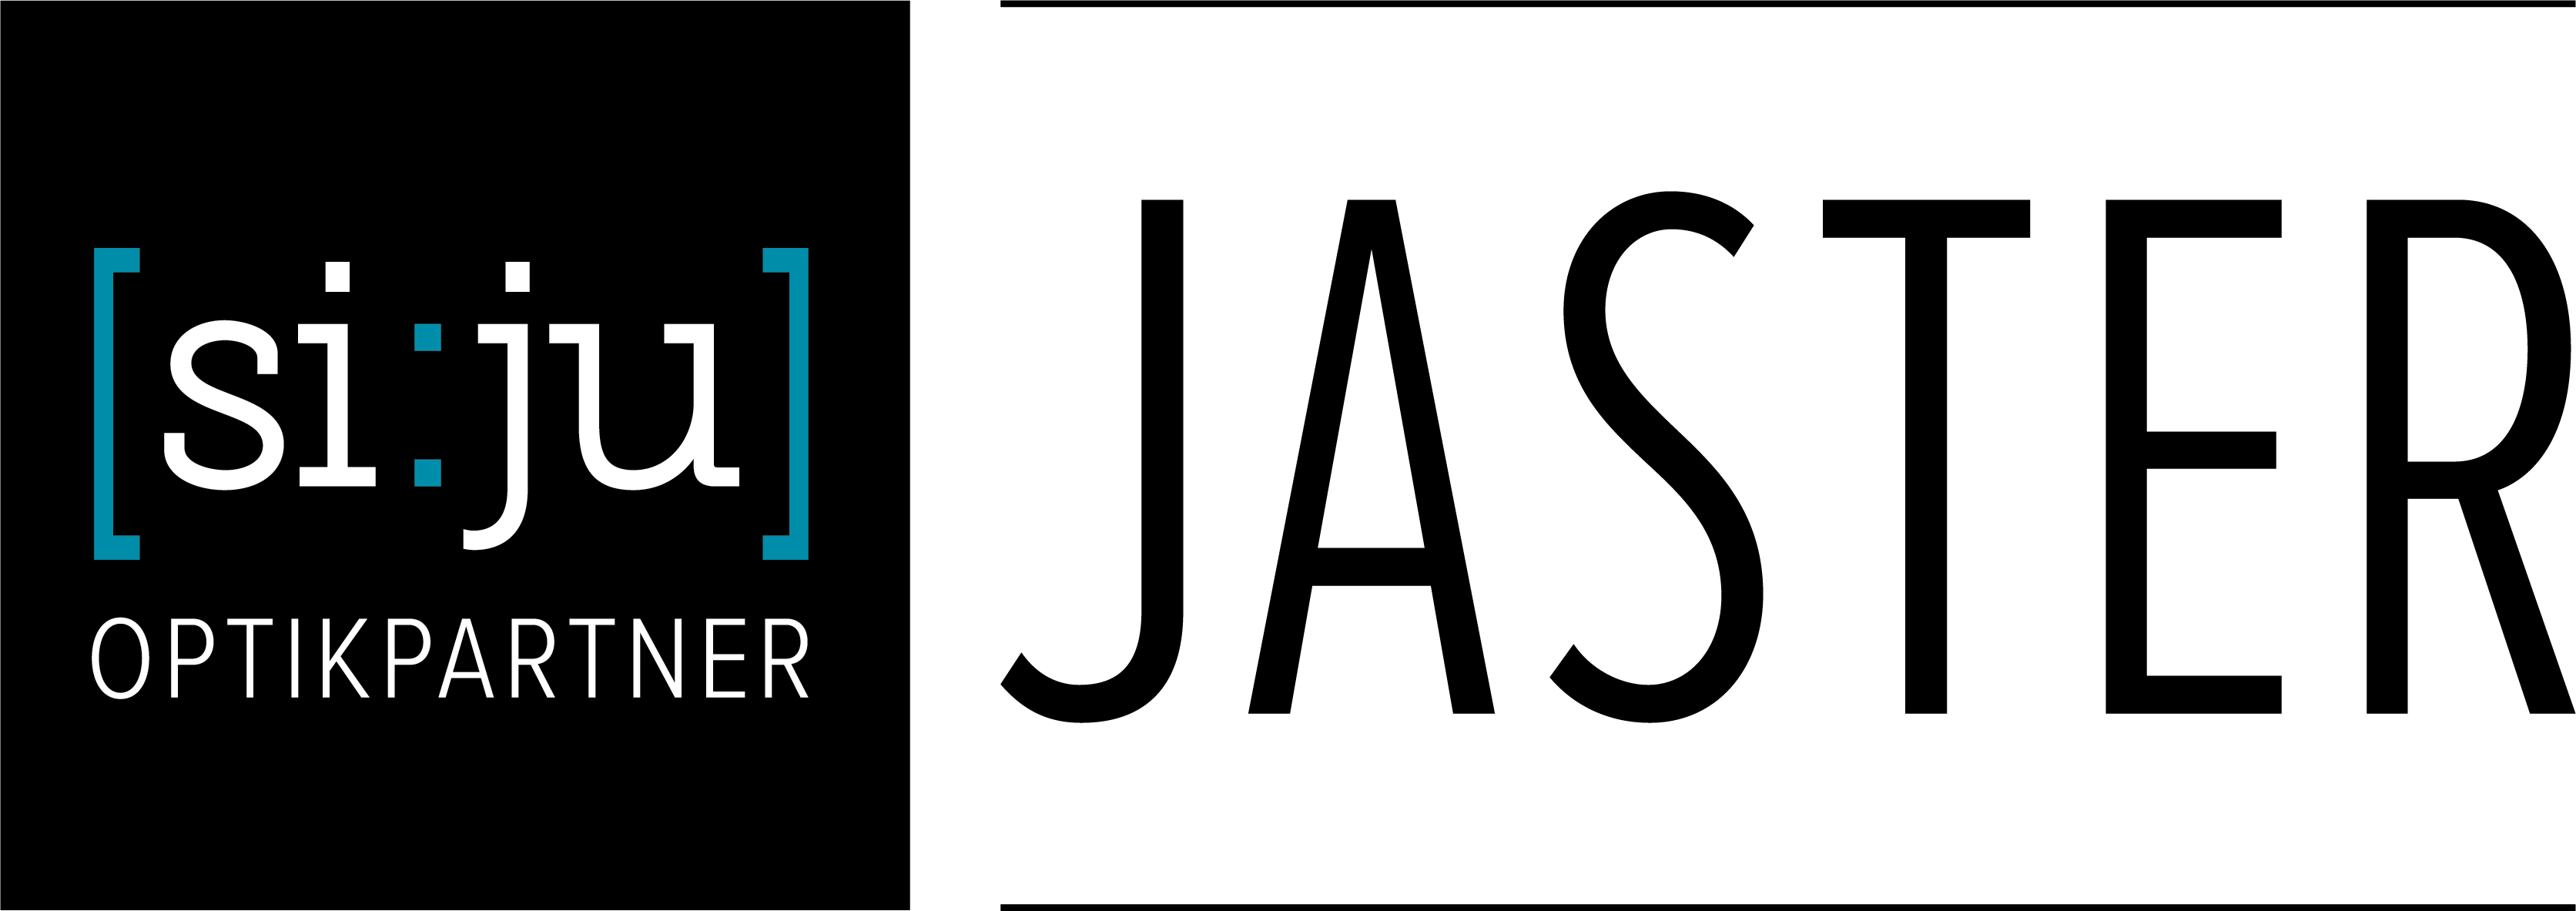 Logo Si:ju-Jaster